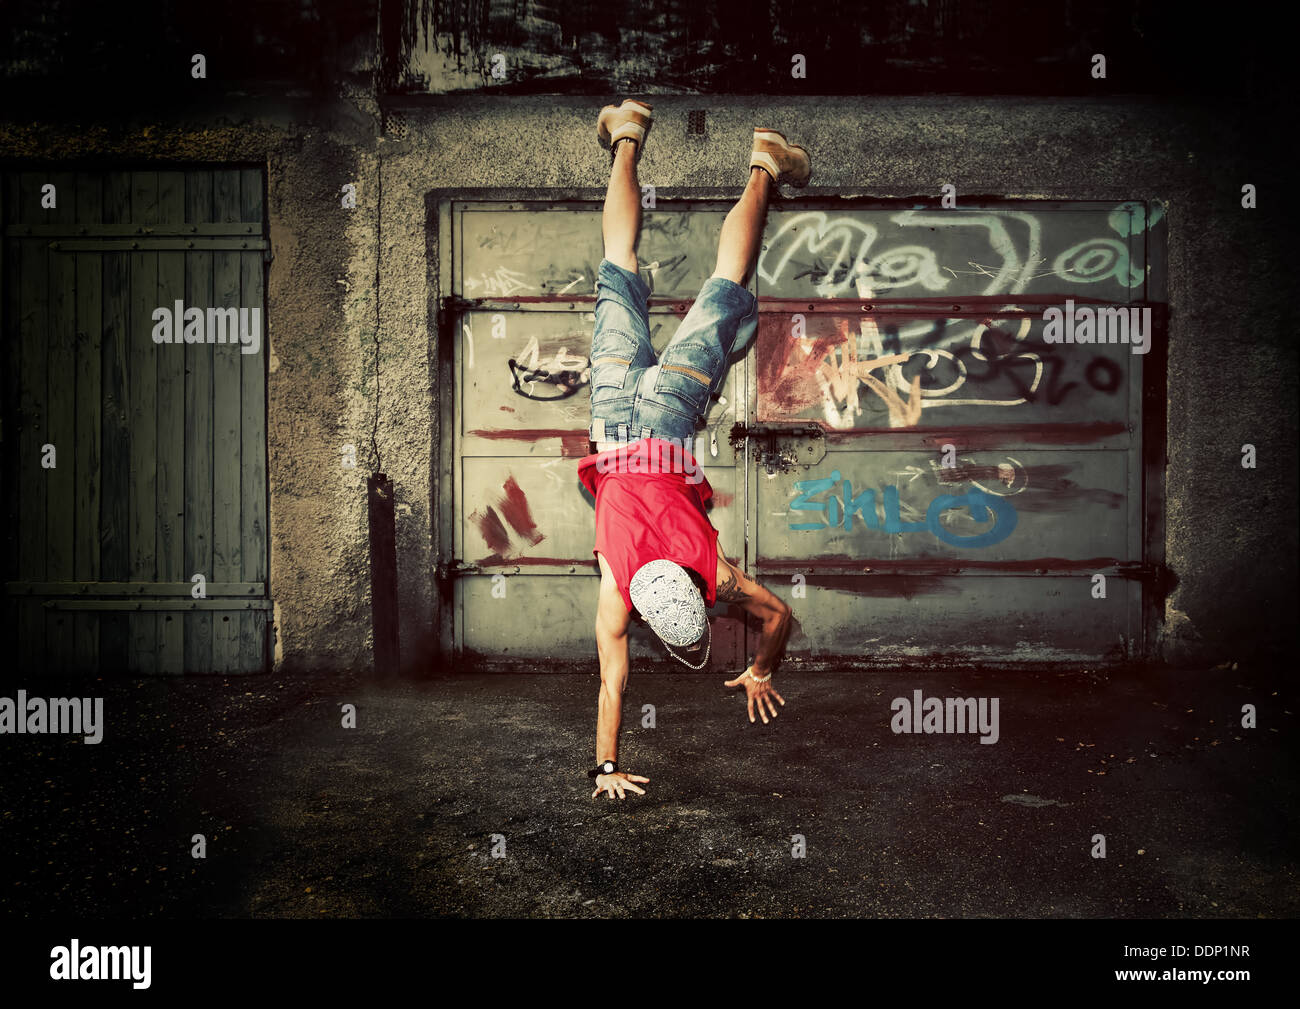 Young man / teen dancing on grunge graffiti wall background Stock Photo